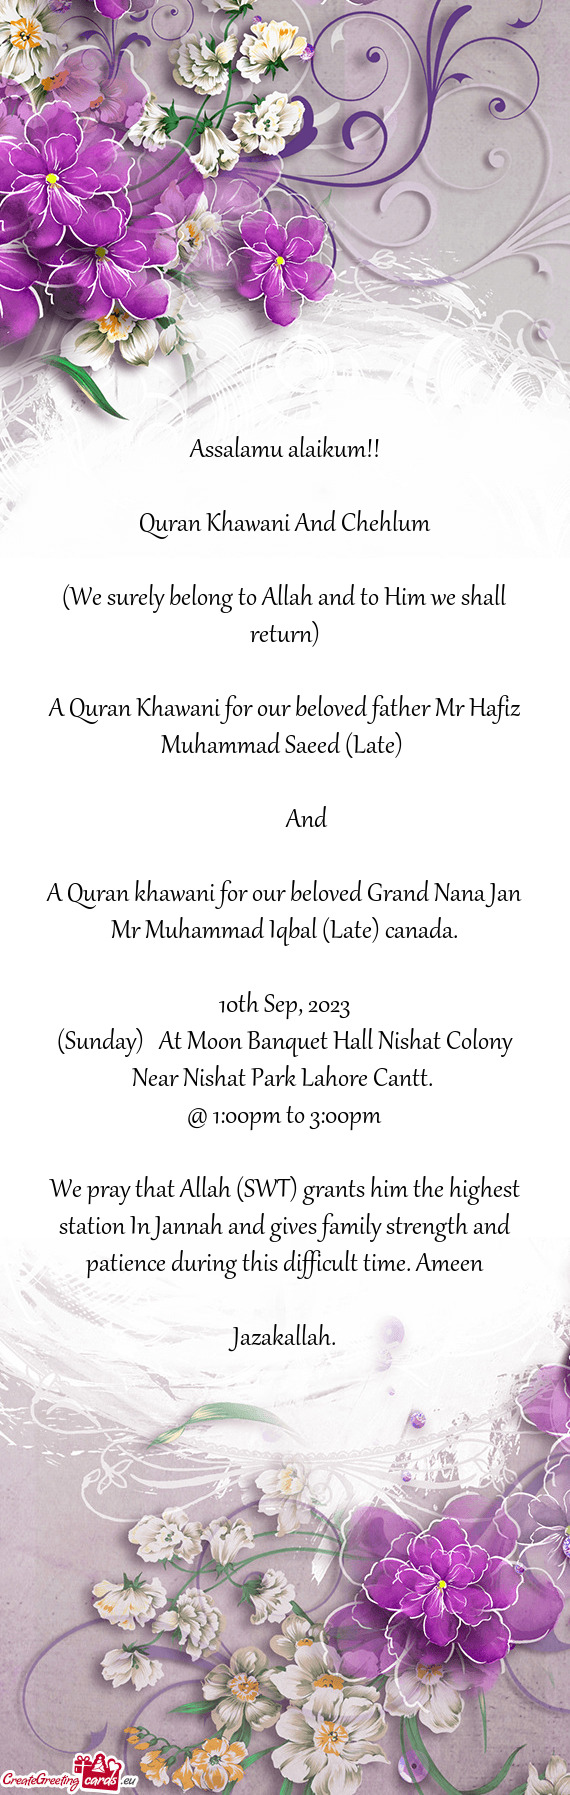 A Quran khawani for our beloved Grand Nana Jan Mr Muhammad Iqbal (Late) canada